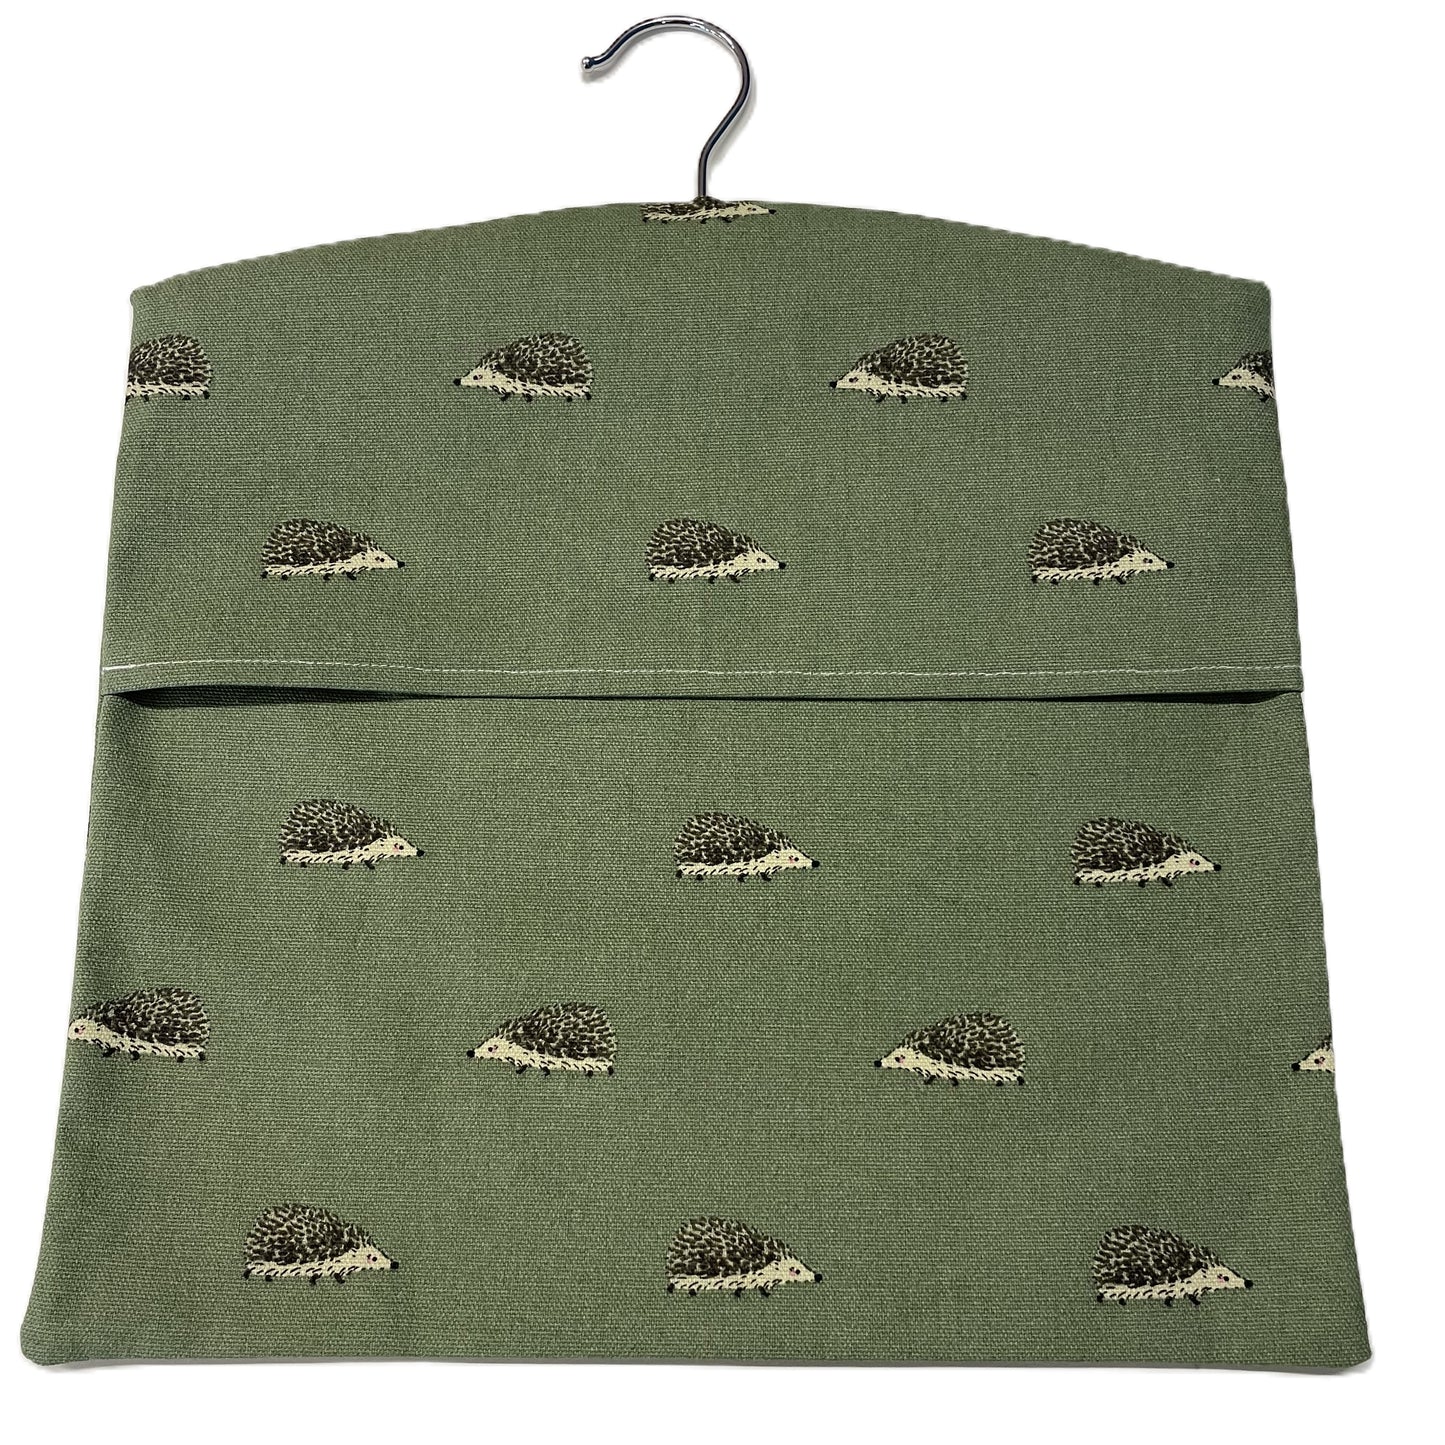 Raspberry Leaf Interiors Handmade Fabric Peg Bag Sophie Allport Hedgehog